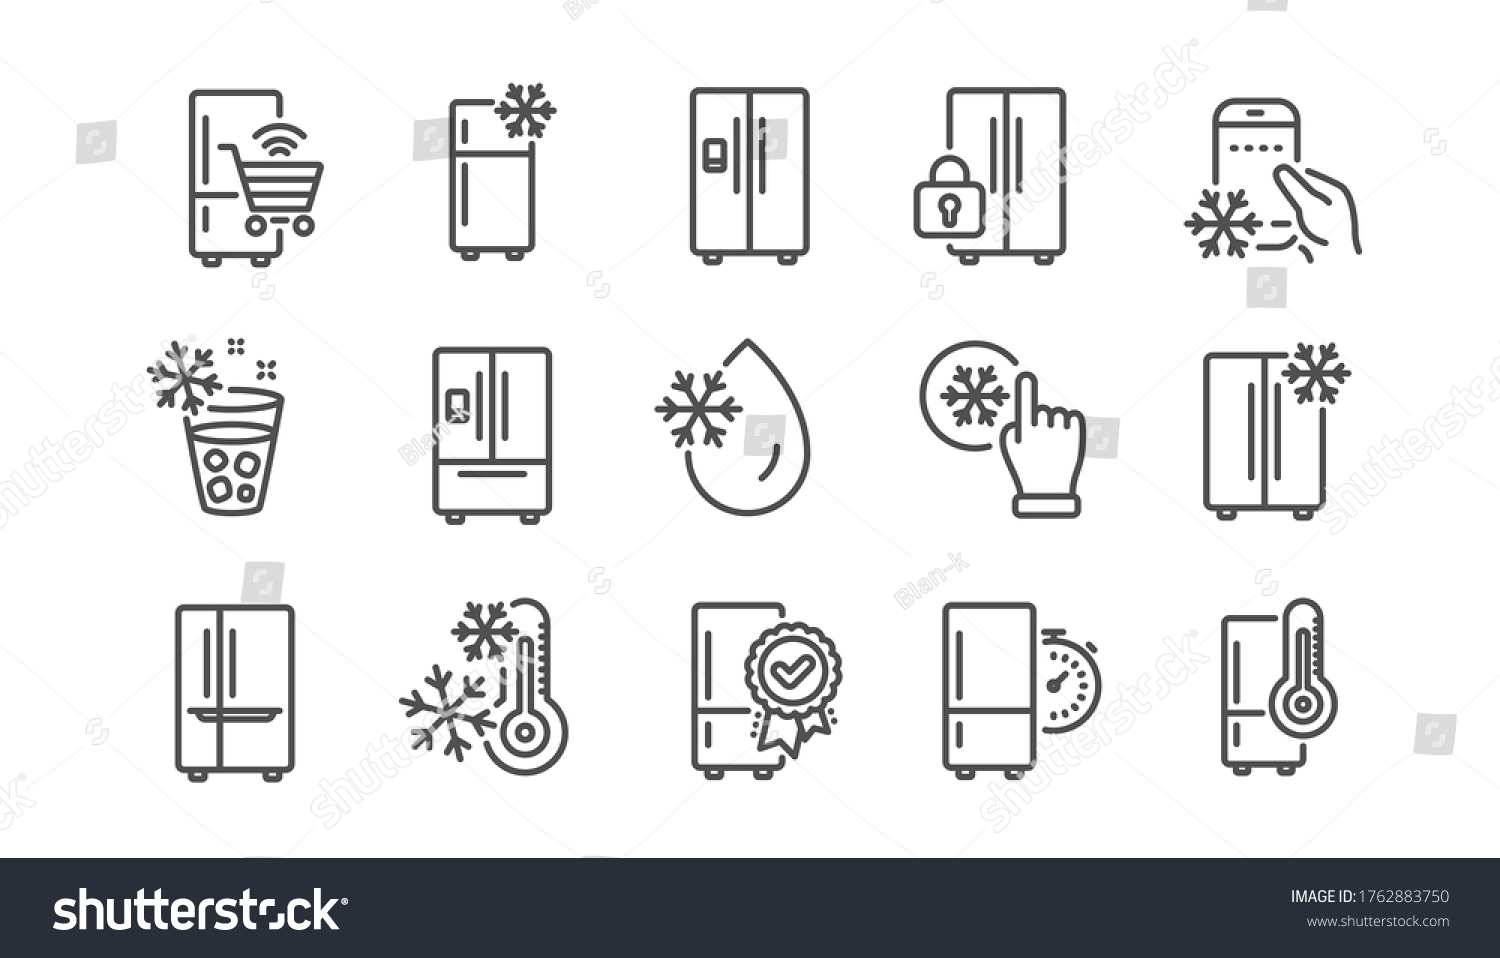 Fridge symbol Images, Stock Photos & Vectors | Shutterstock